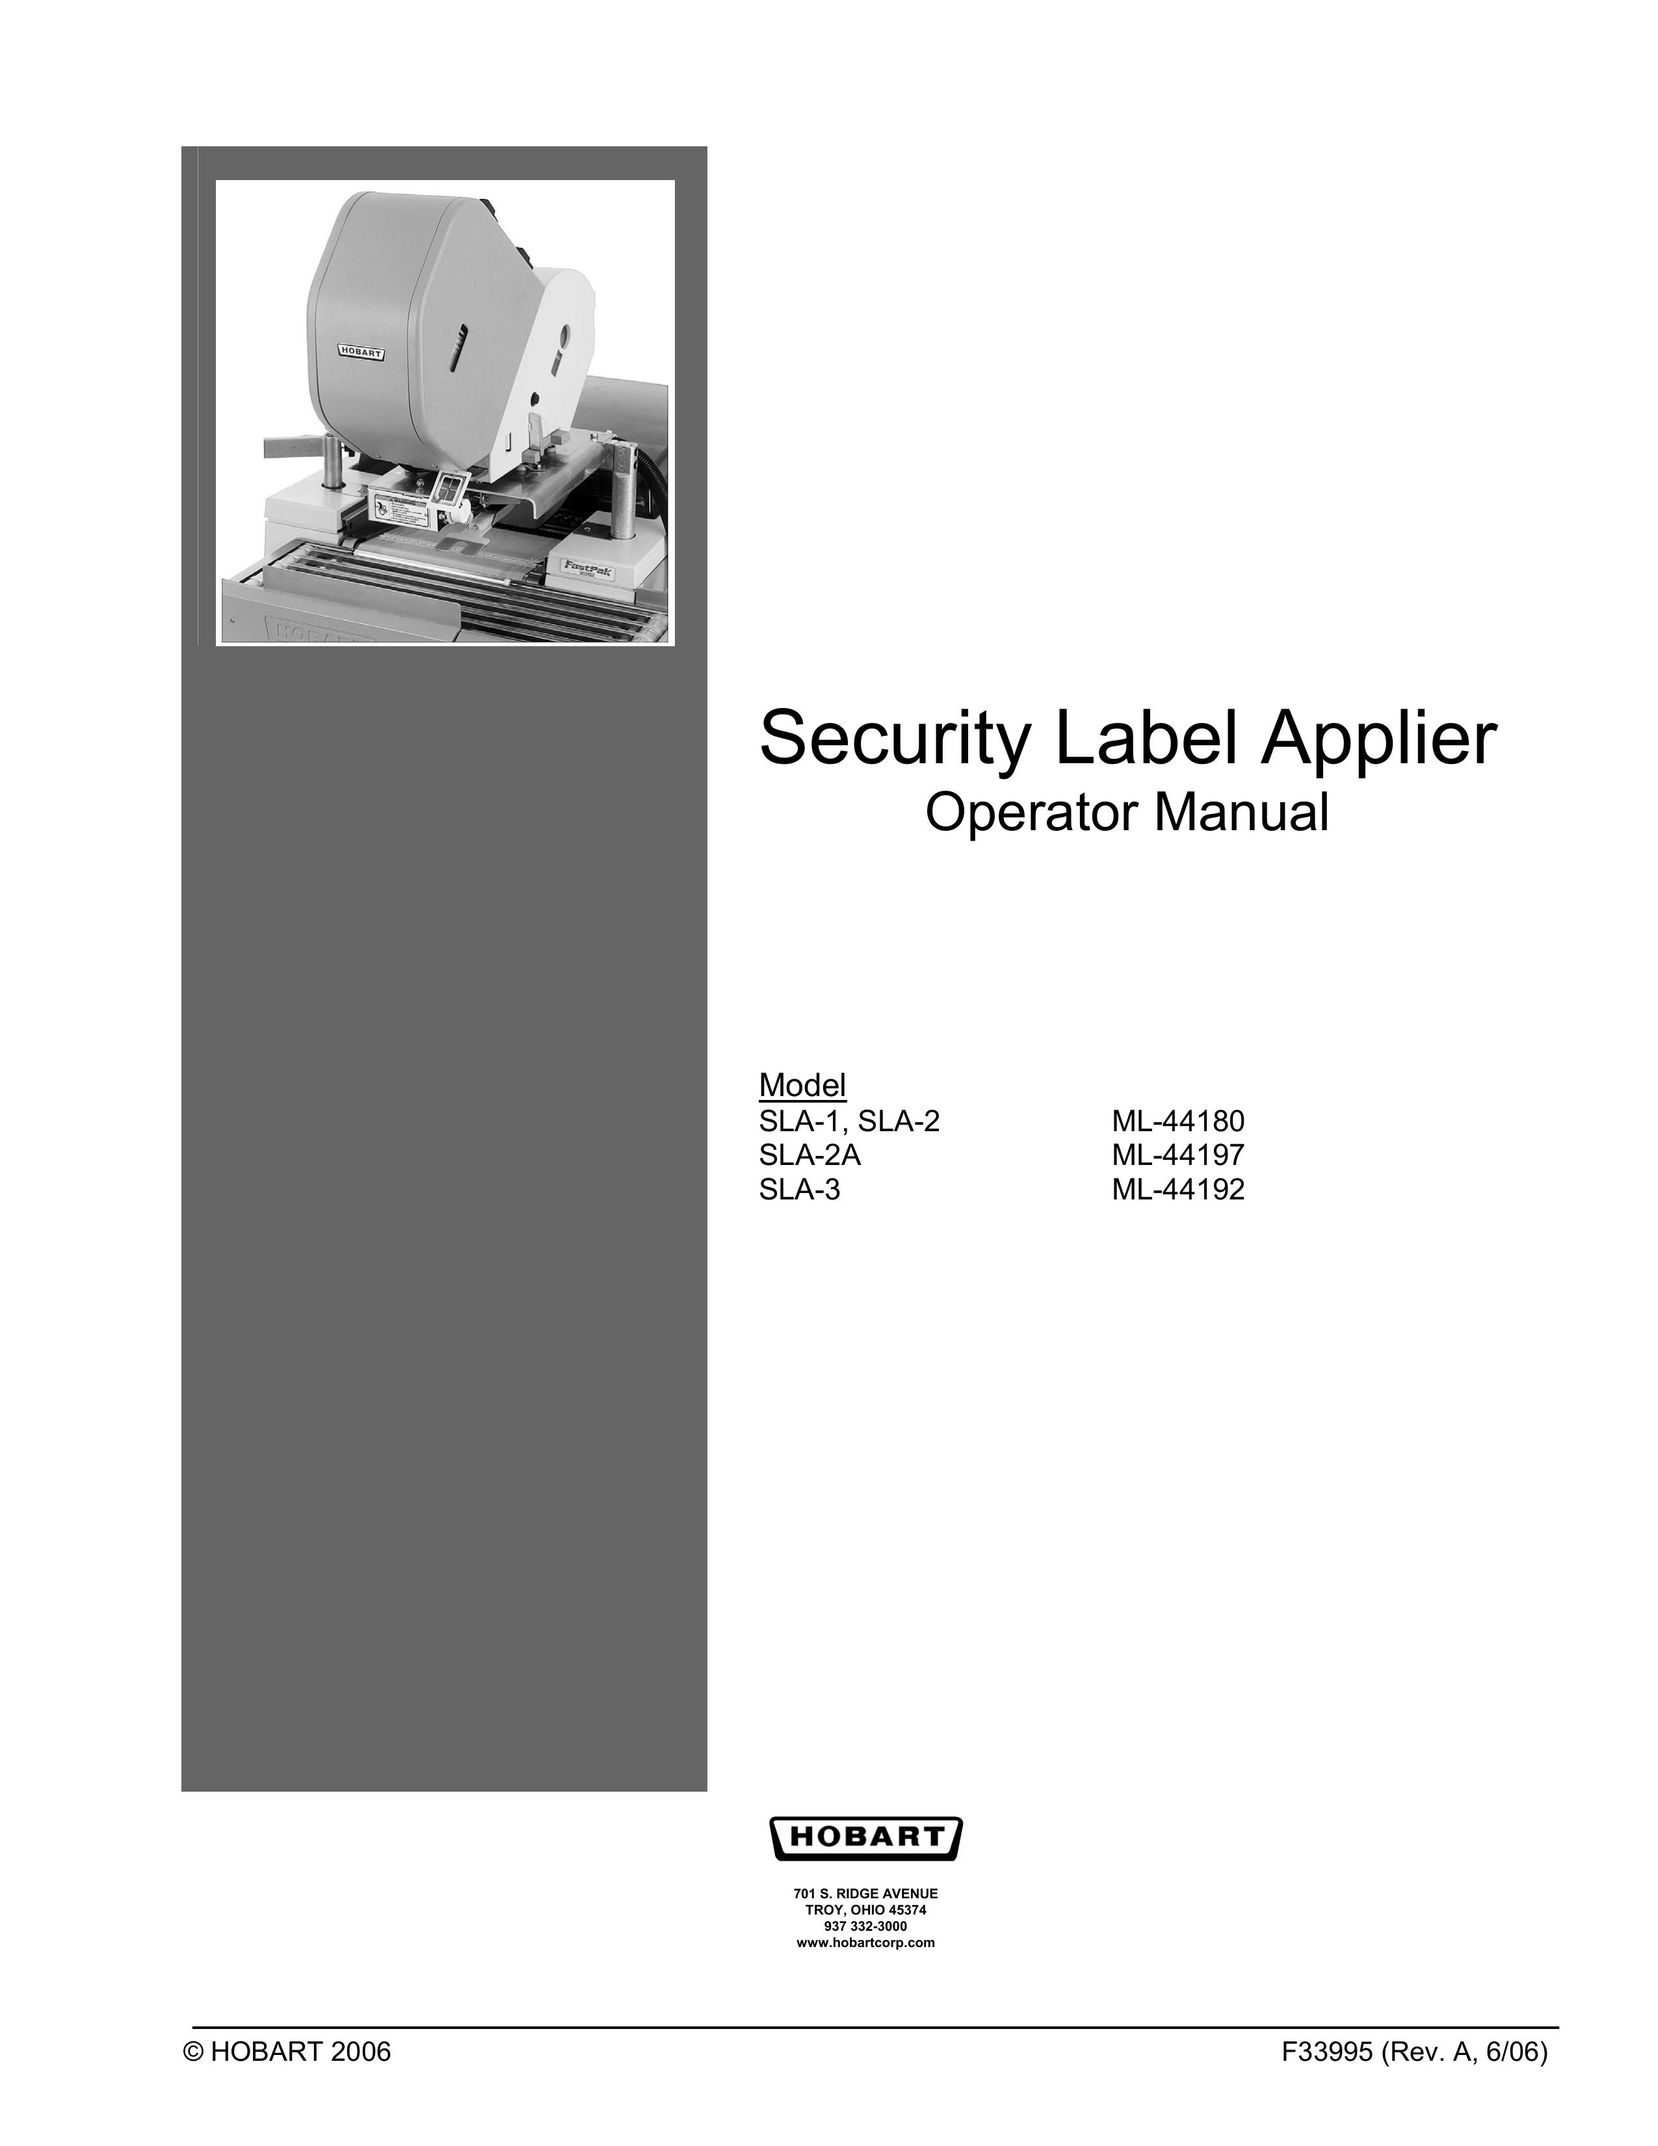 Hobart SLA-3 ML-44192 Label Maker User Manual